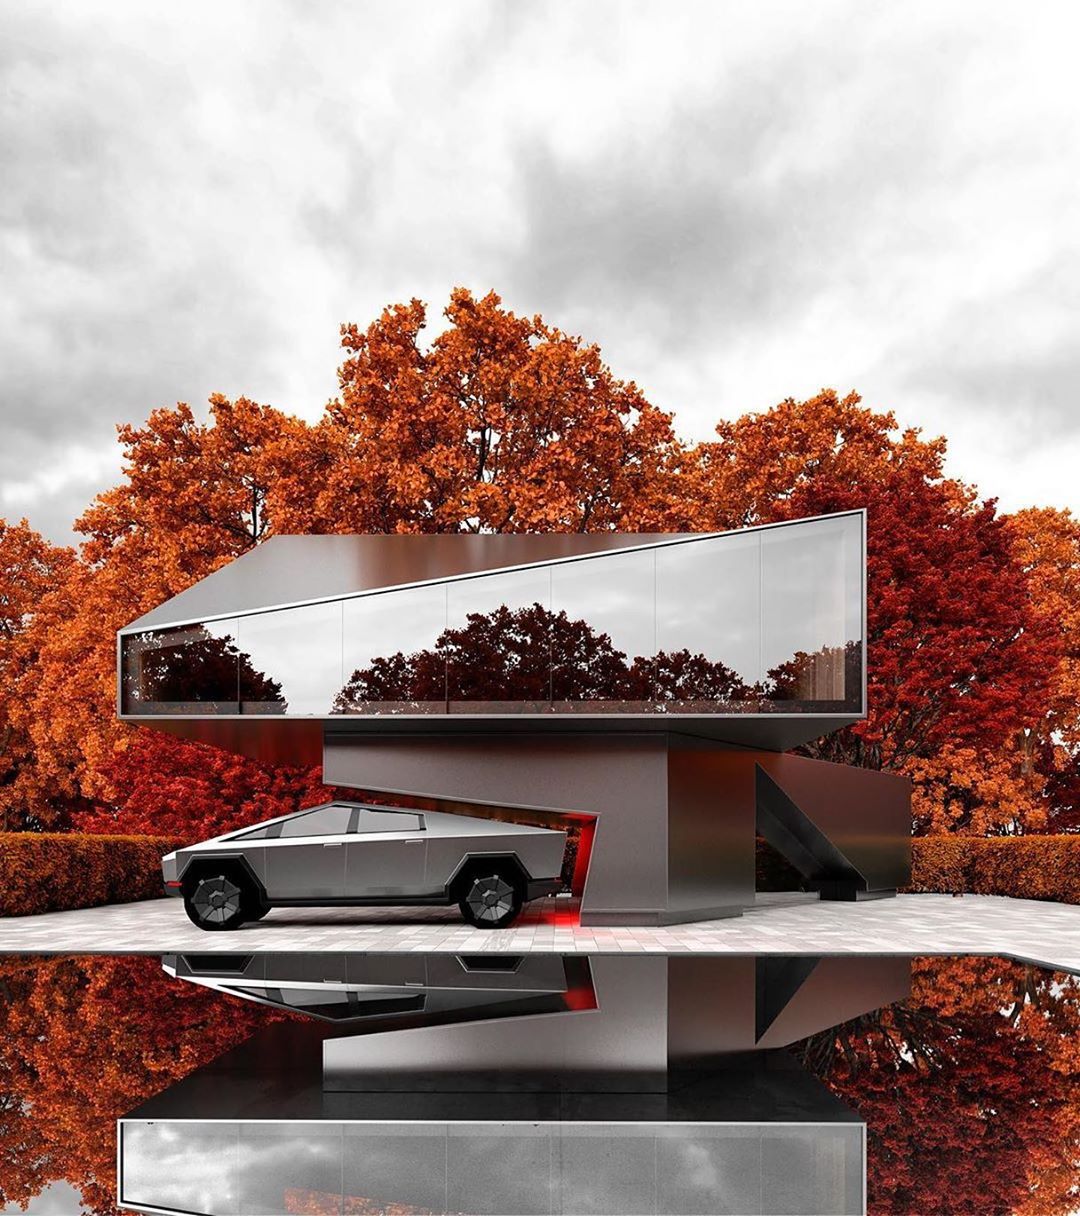 https://s1.cdn.autoevolution.com/images/news/gallery/tesla-house-concept-looks-sleek-has-cybertruck-puzzle-garage_2.jpg